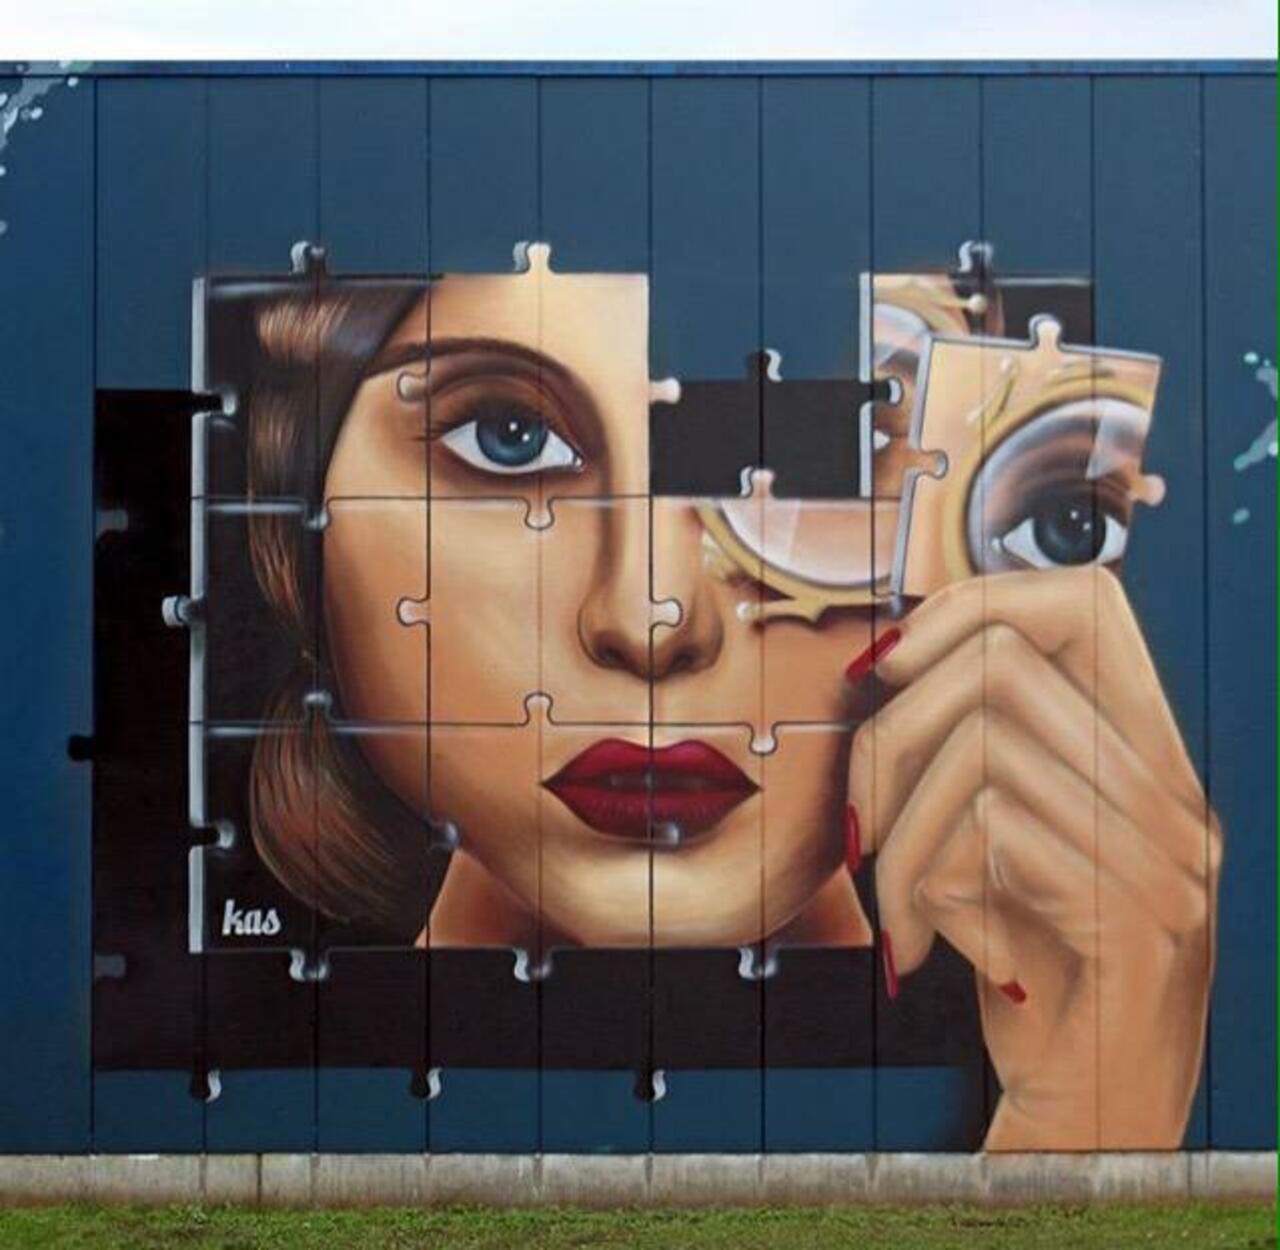 RT @Rabeliouus: RT @GoogleStreetArt: Kas Art's new Street Art "Piece of me" in Aalst Belgium 

#art #graffiti #mural #streetart http://t.co/XYk5oWMWa6